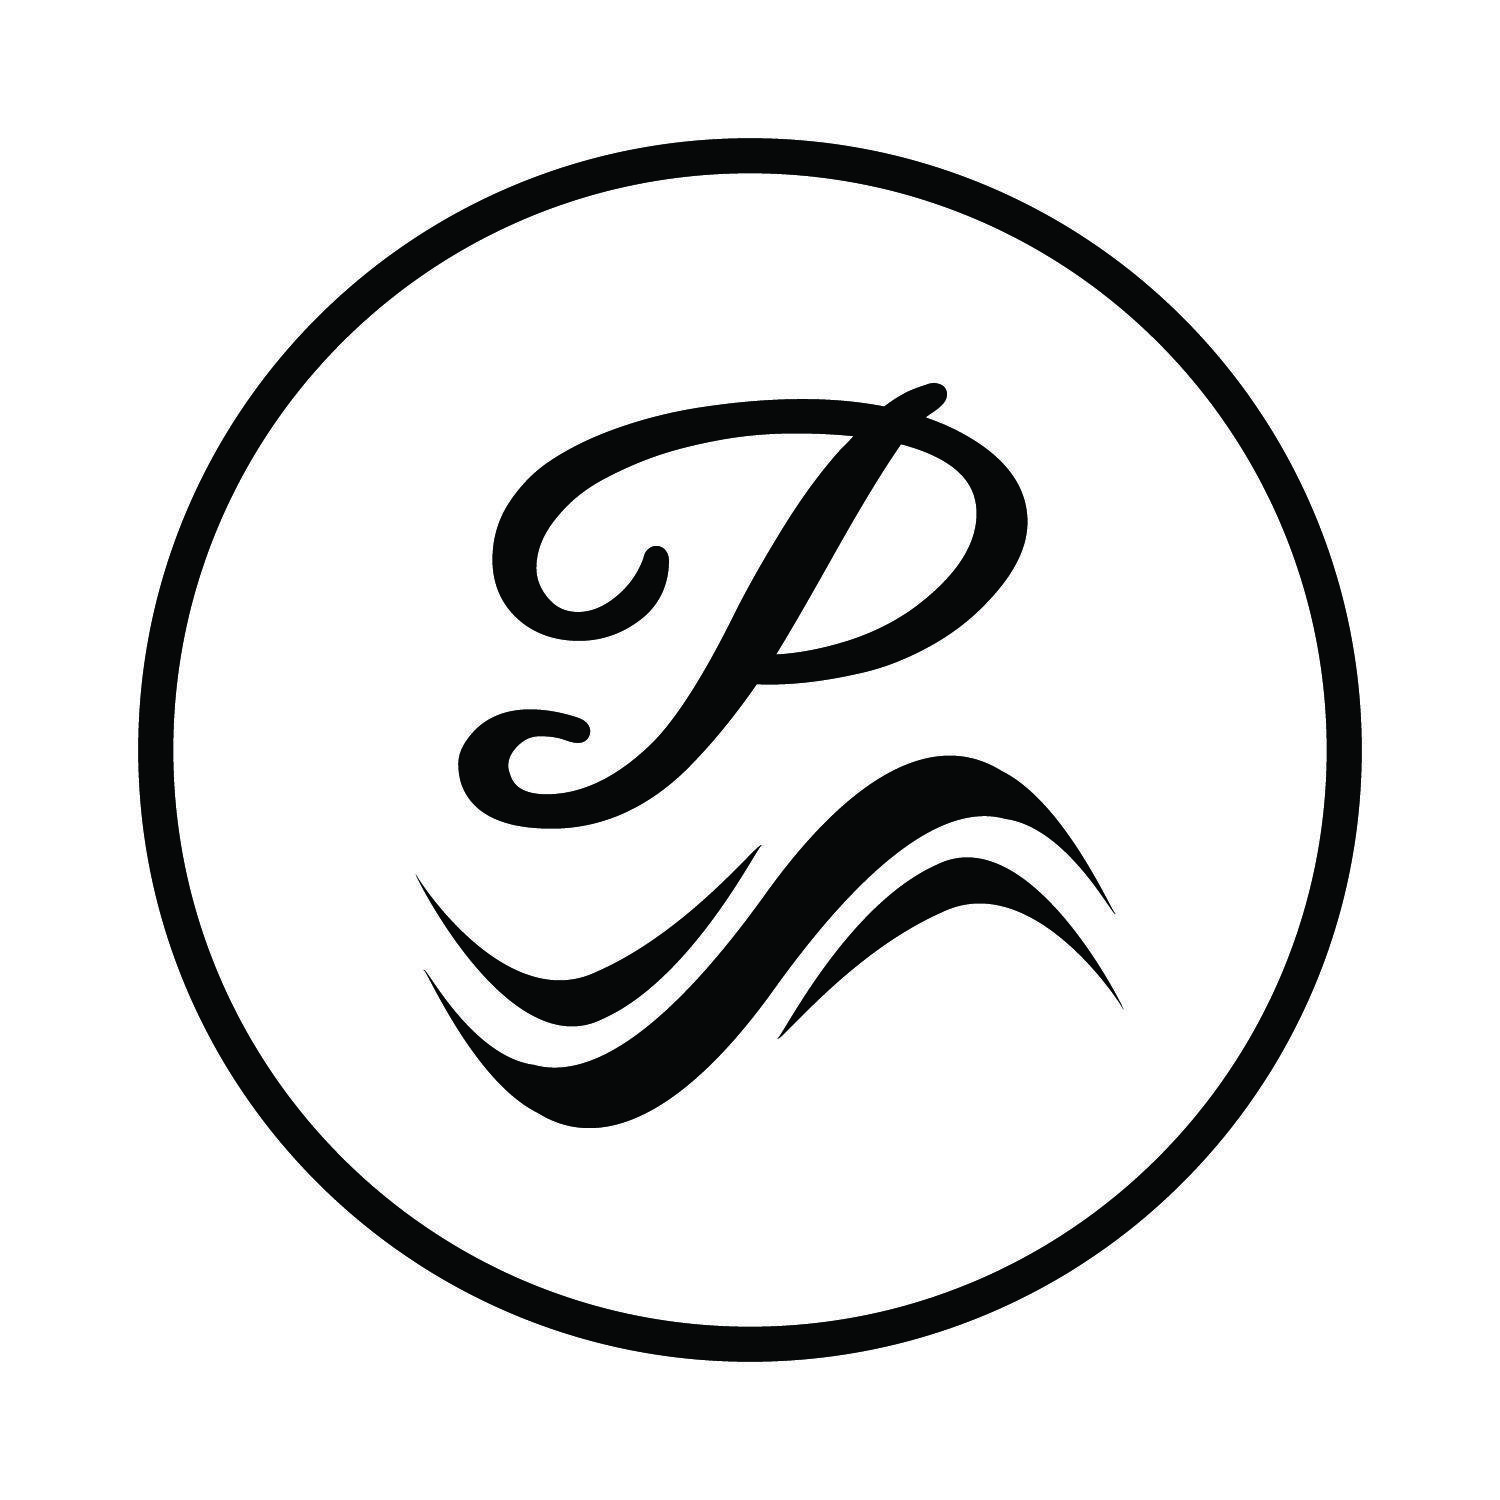 Black and White P Logo - City of Plattsmouth